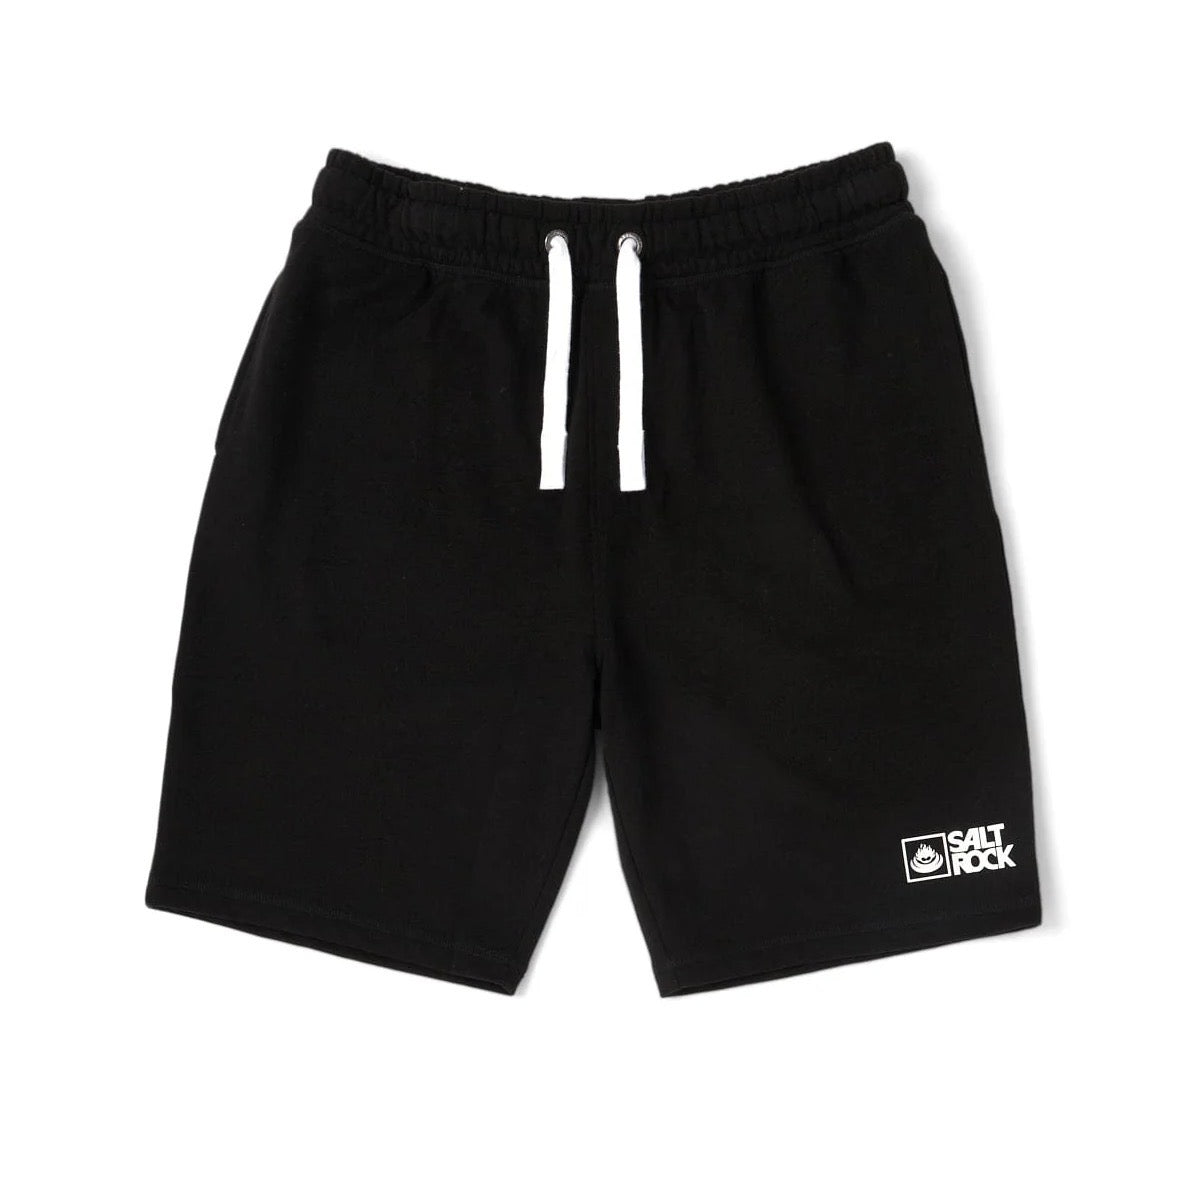 Saltrock Mens Original Jersey Shorts Black Clothing XS ADULT / Black,SMALL ADULT / Black,MEDIUM ADULT / Black